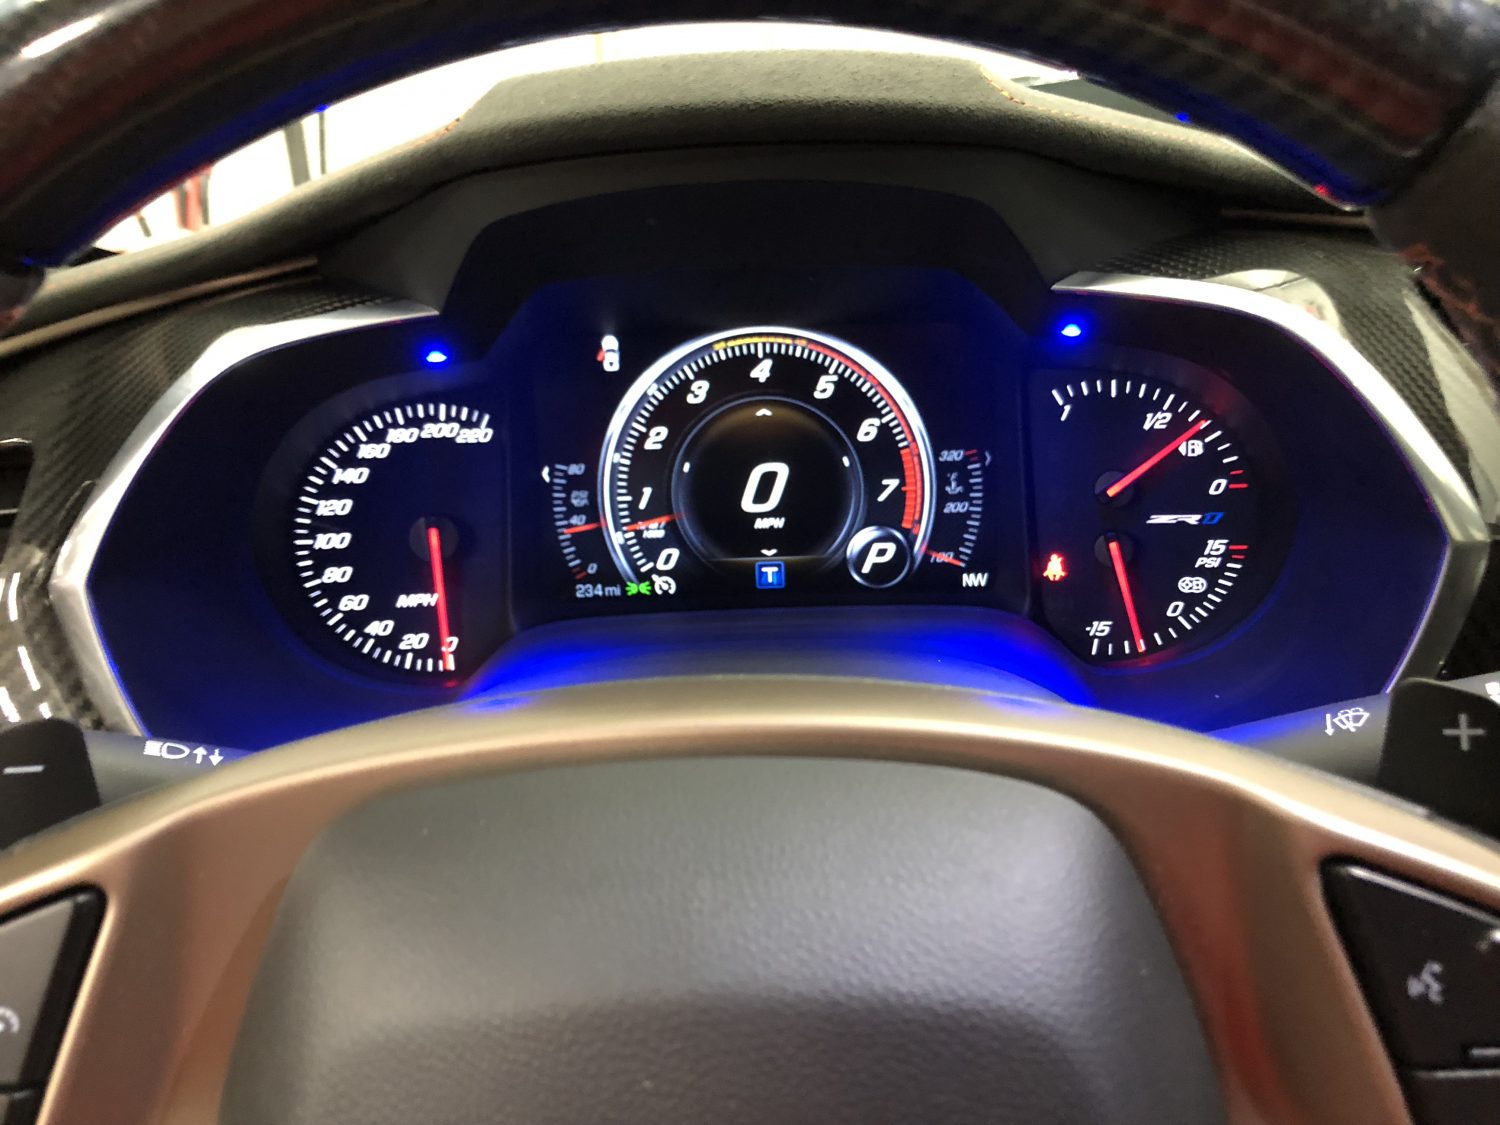 k40 radar detector alert leds on a 2018 Corvette ZR-1